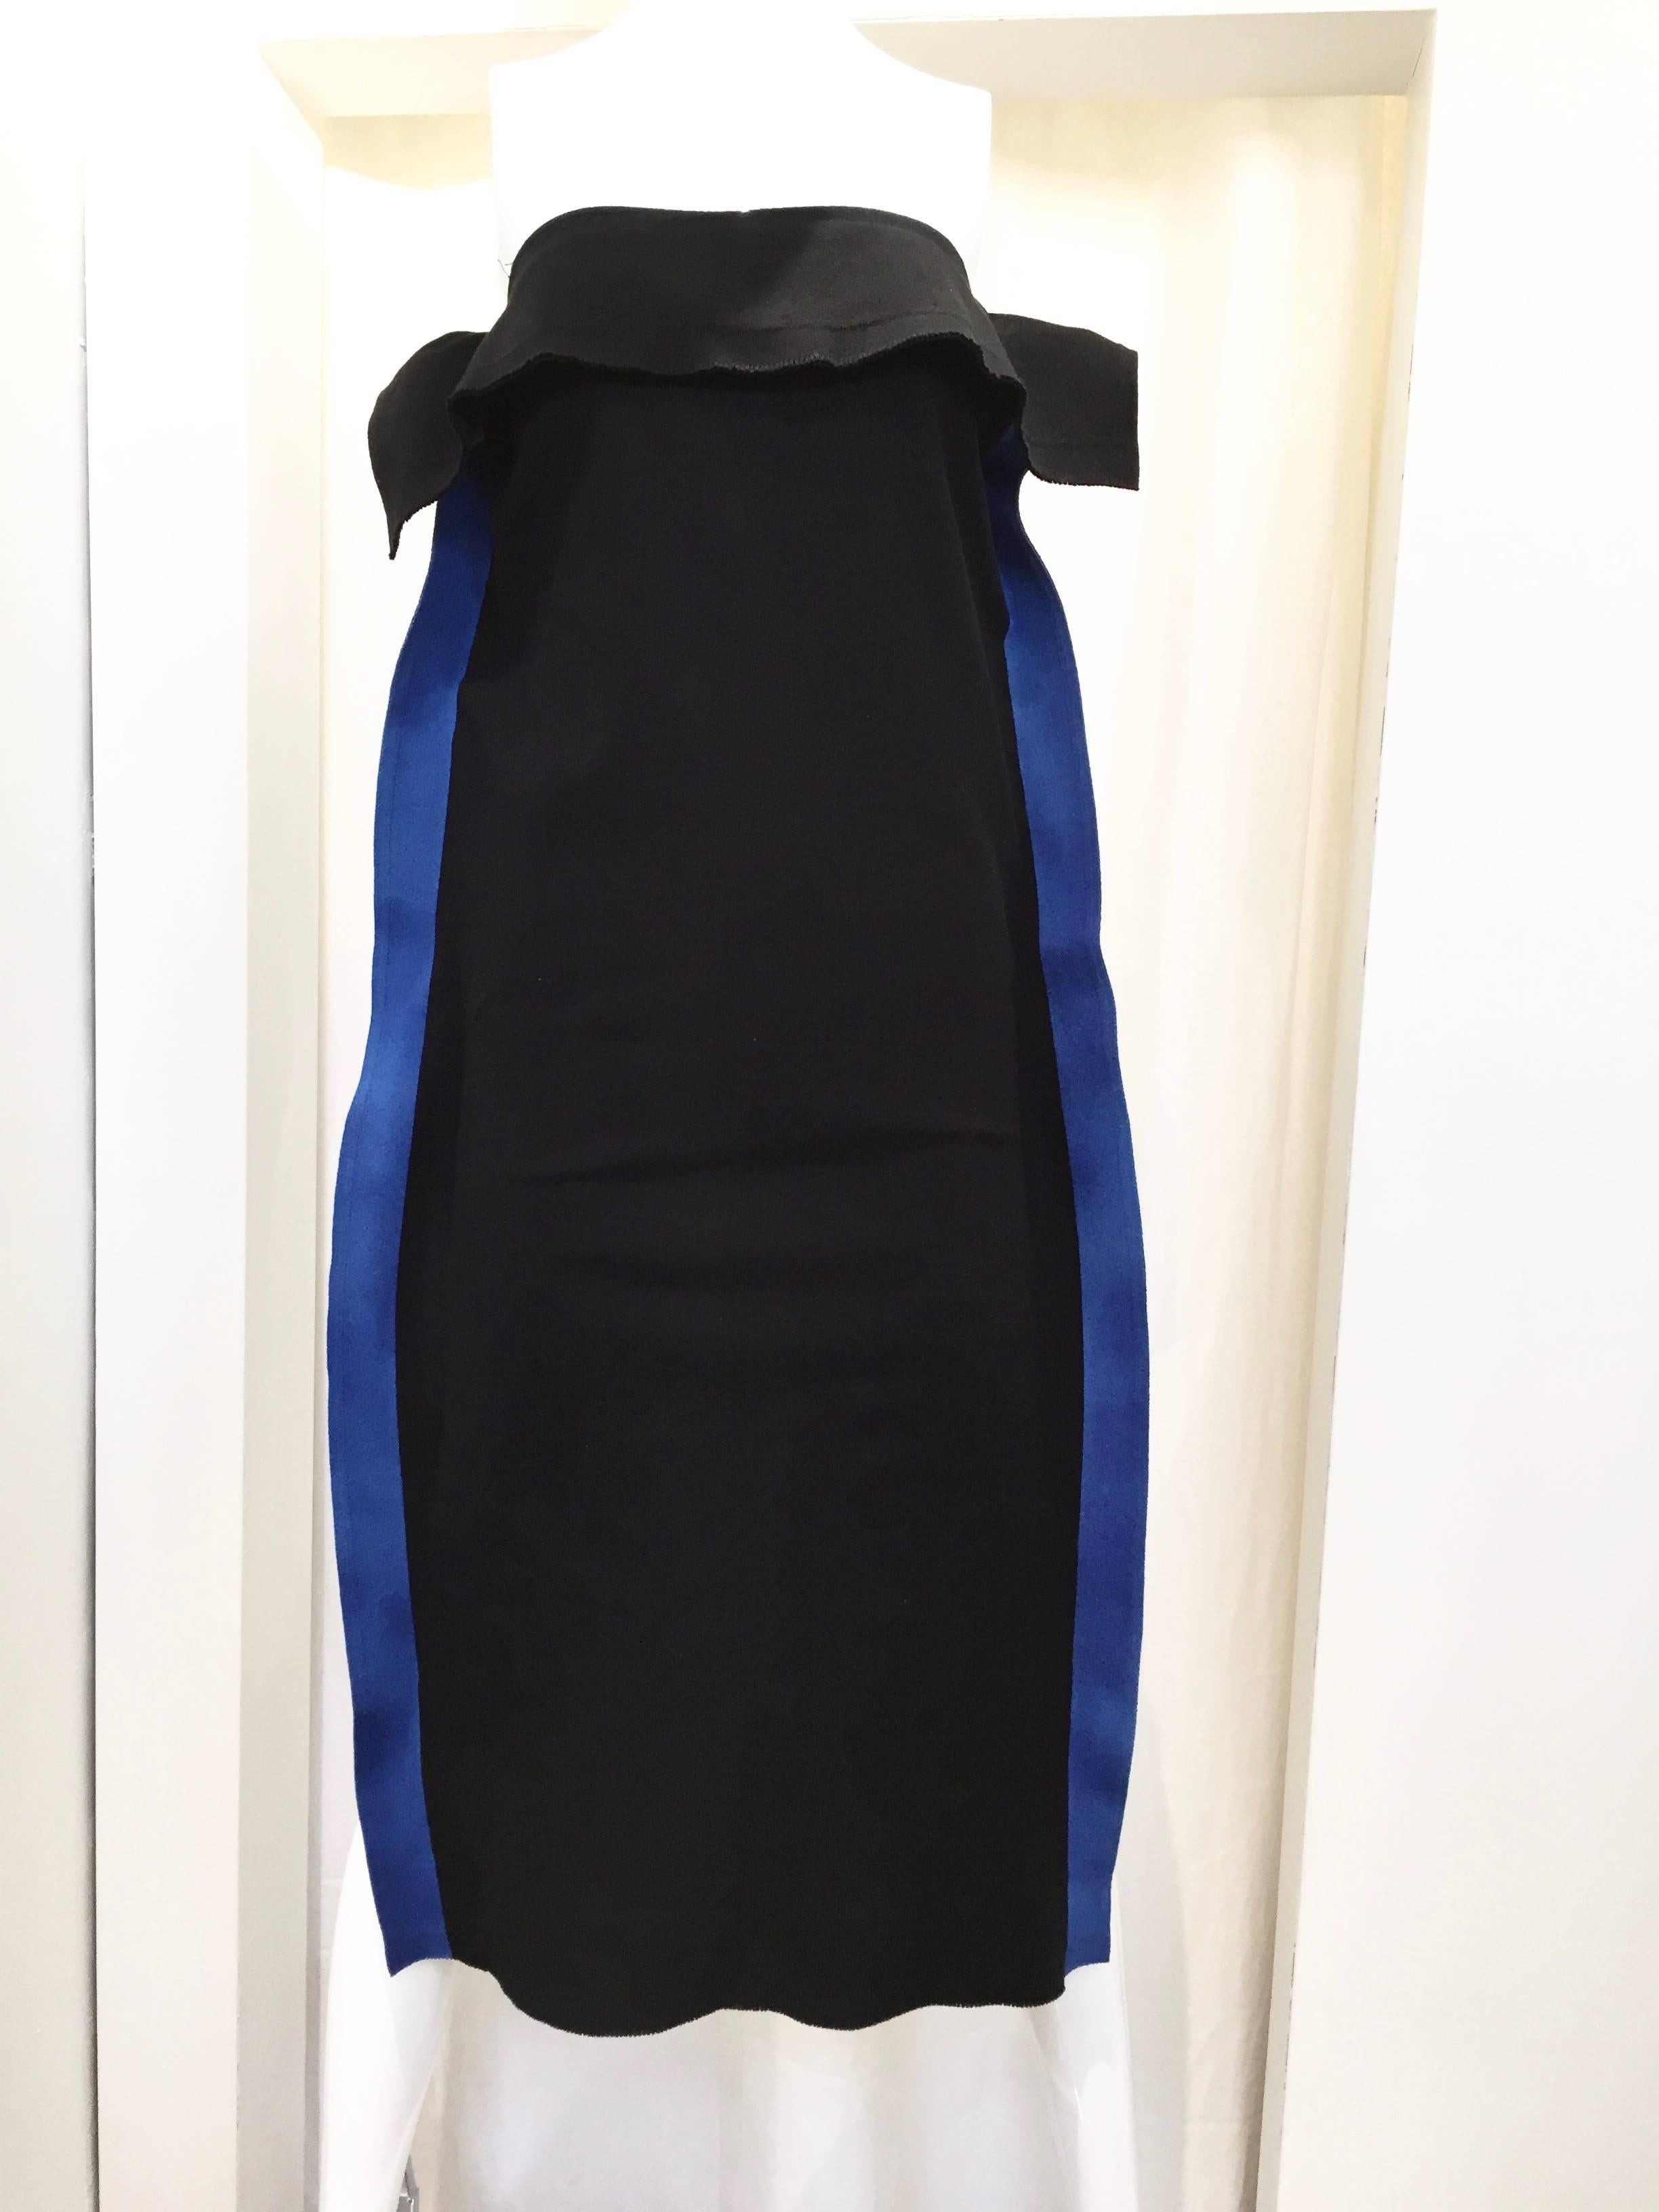 Rare Issey Miyake black and blue strapless  knit dress 1